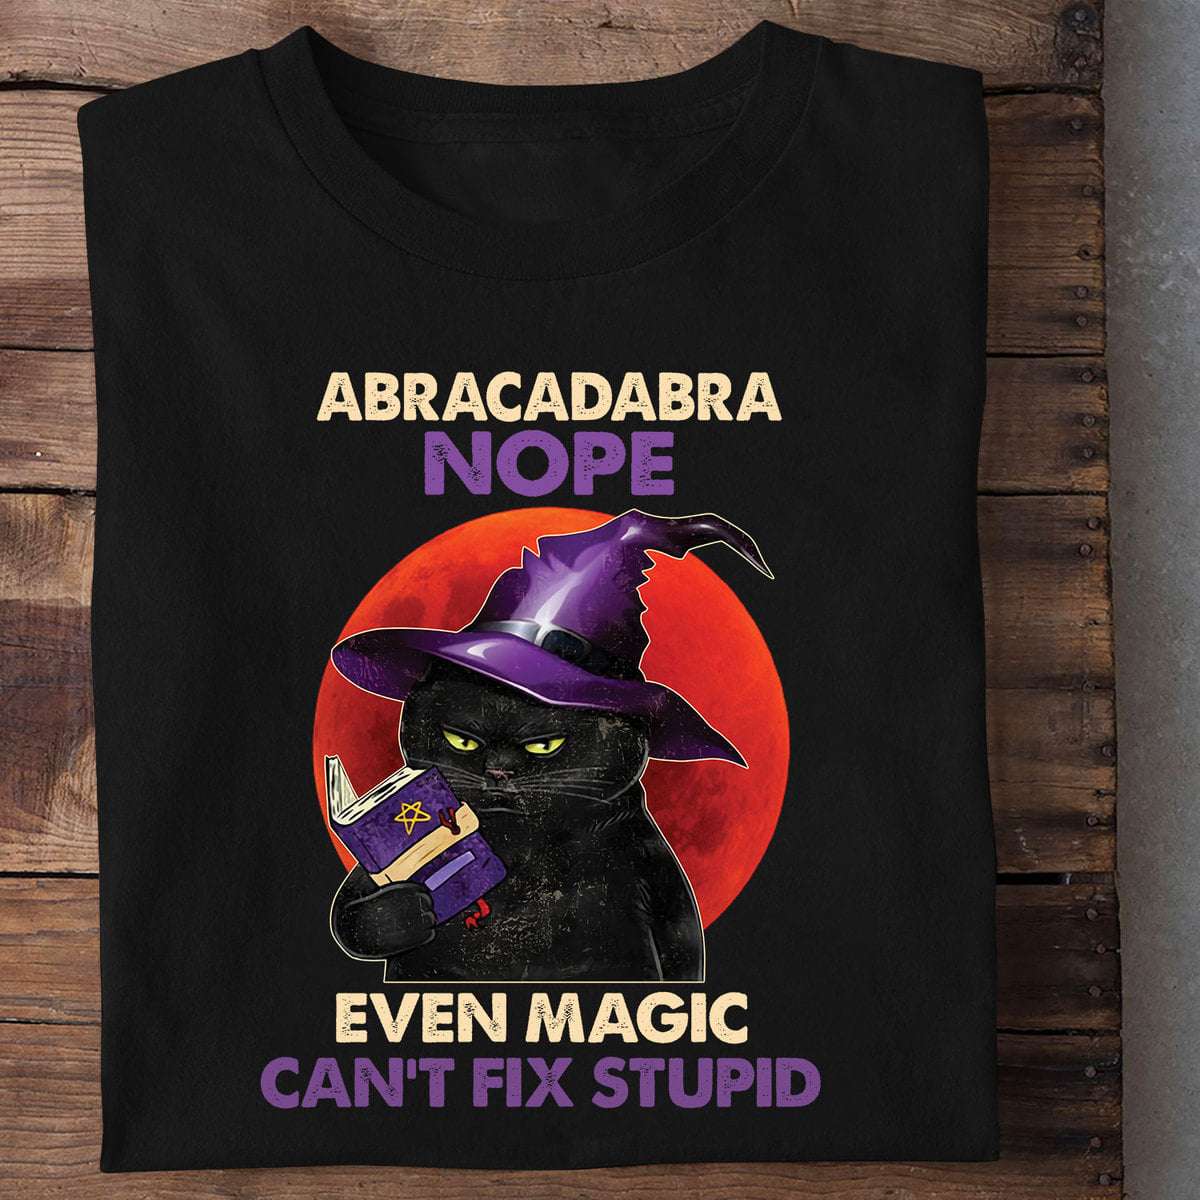 Black Cat Witch - Abracadabra nope even magic can't fix stupid